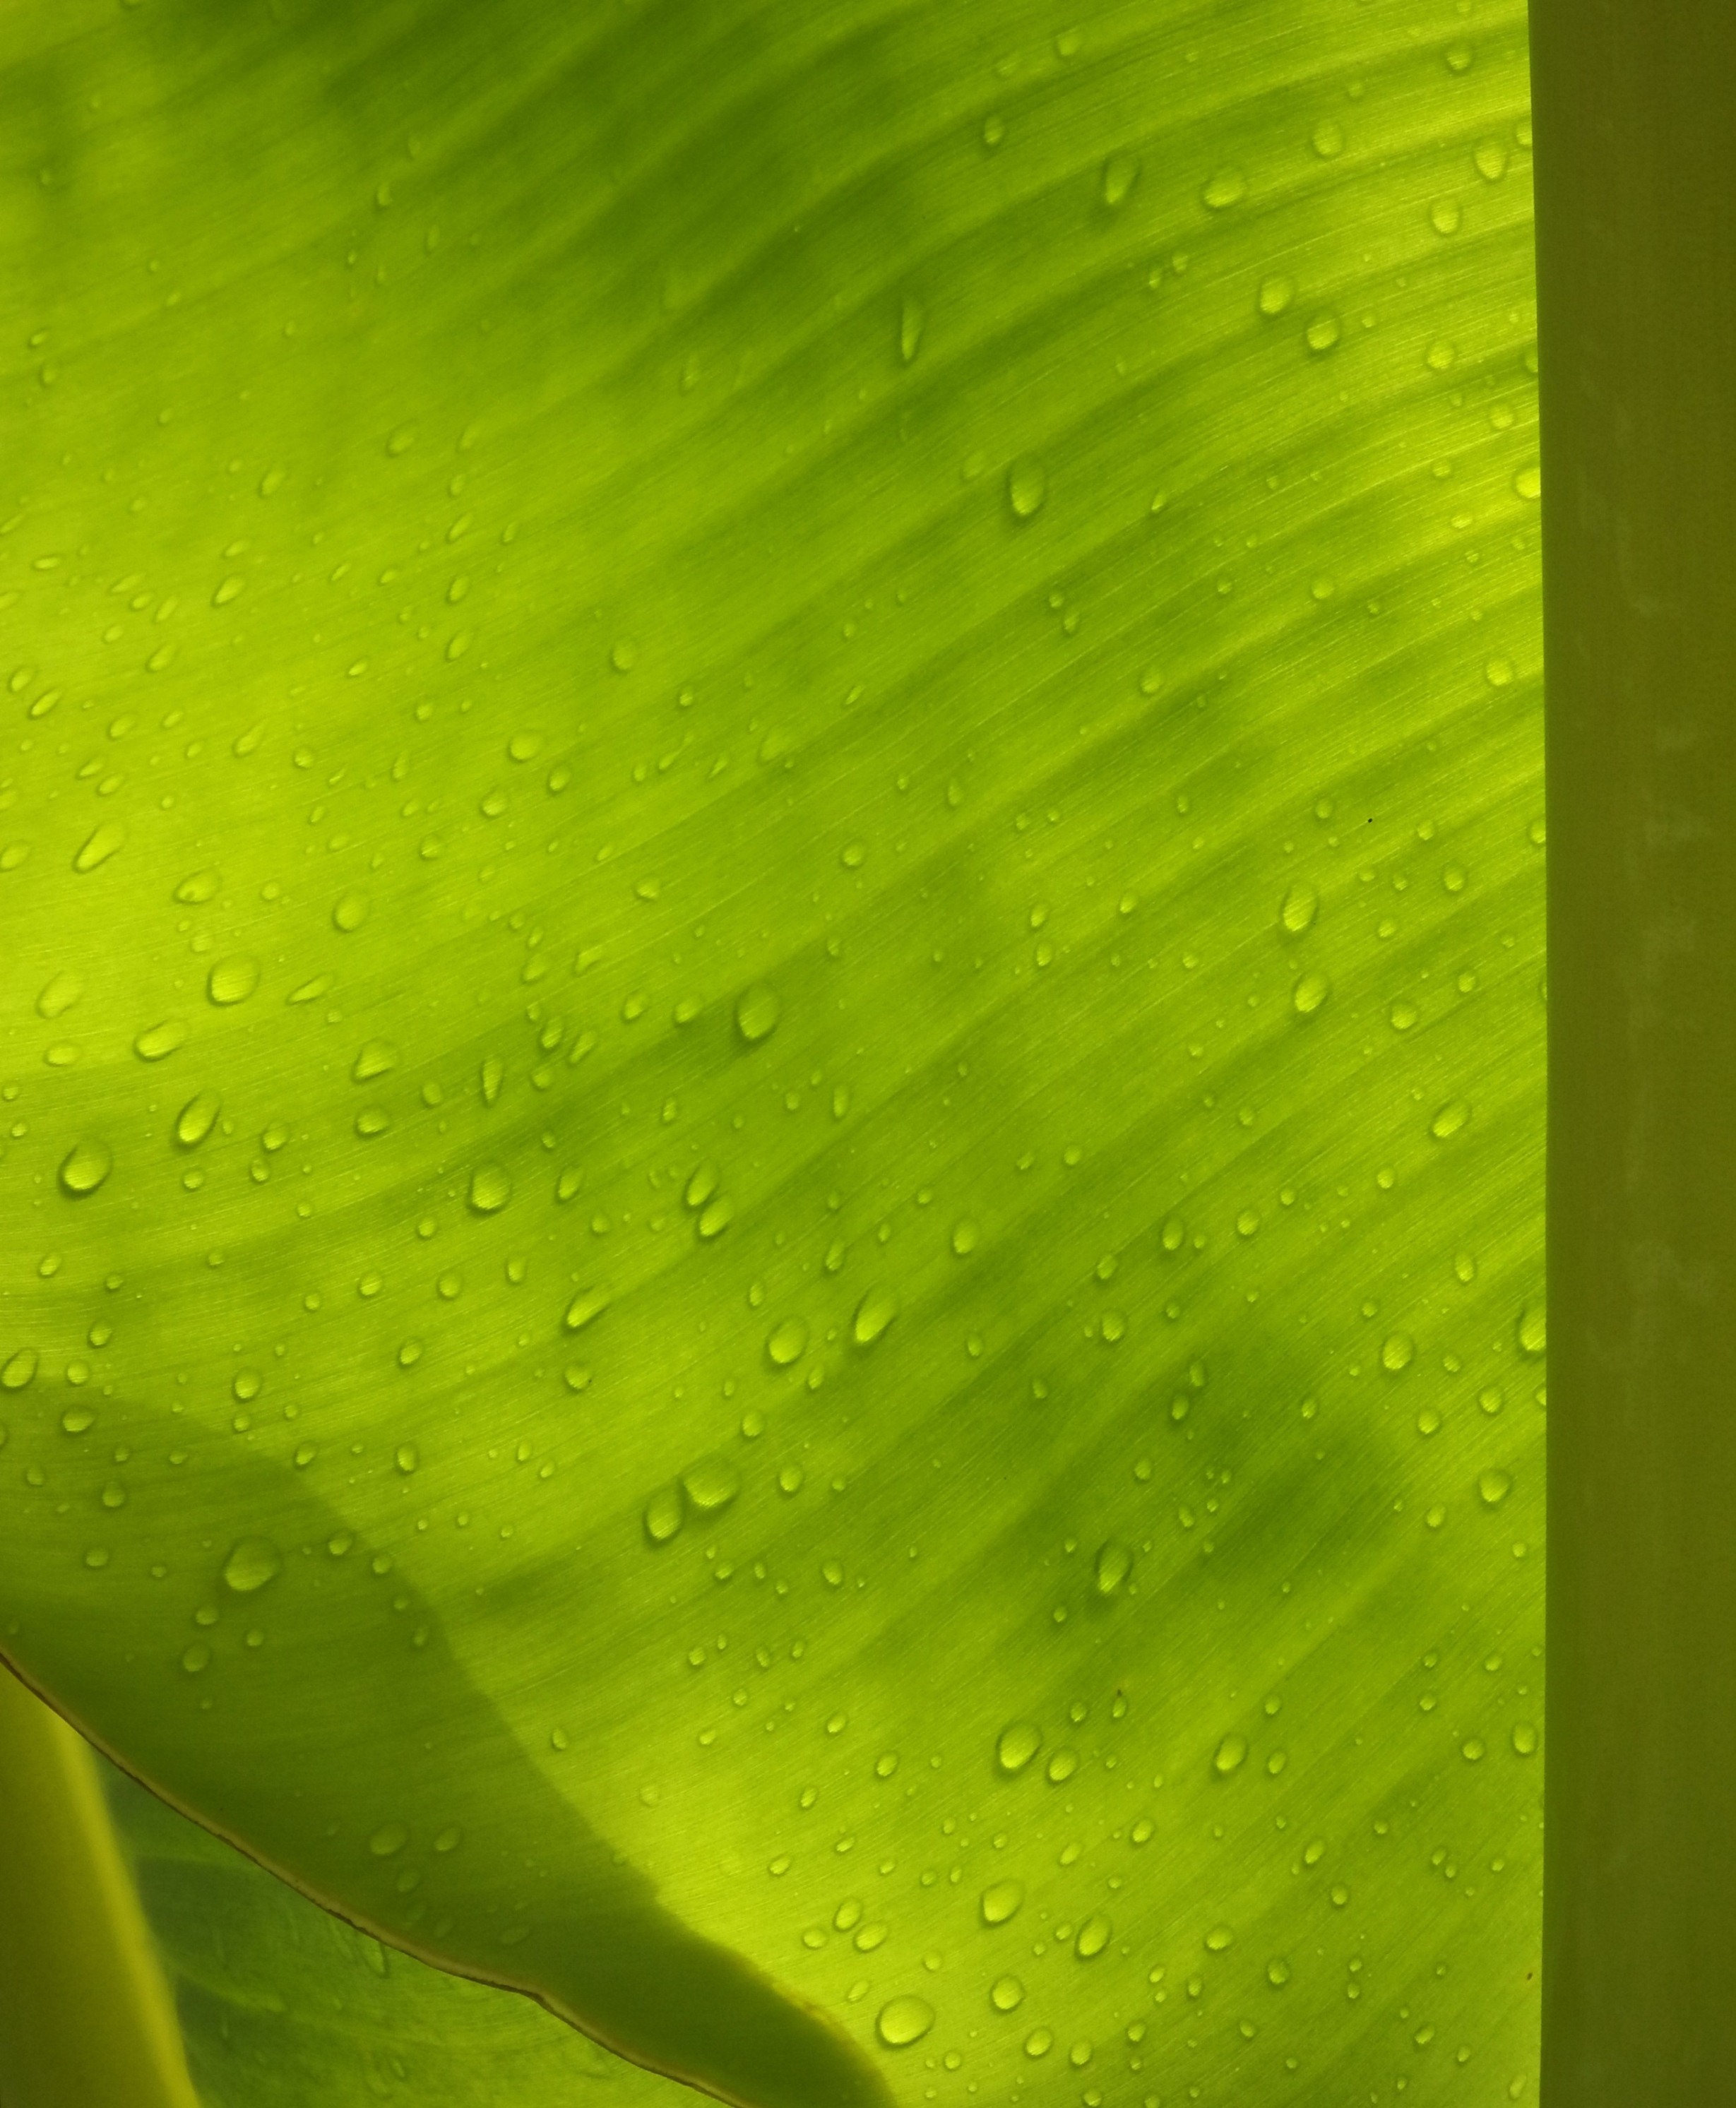 Water droplets on banana leaf photo